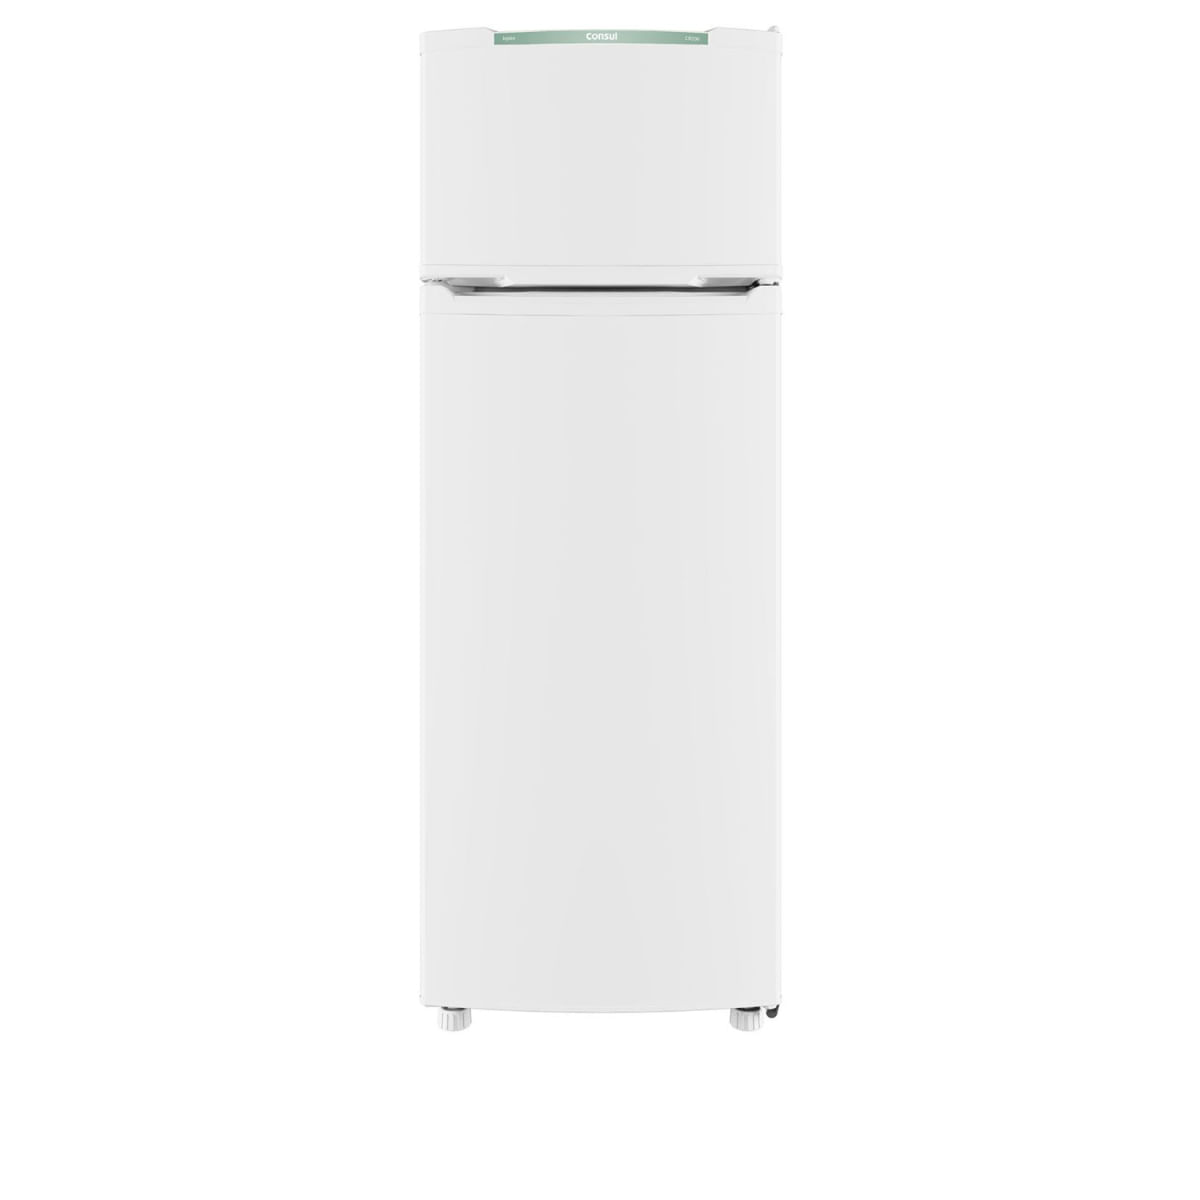 Refrigerador Consul Cycle Defrost Duplex 334 Litros Branco CRD37EBANA– 127 Volts 110